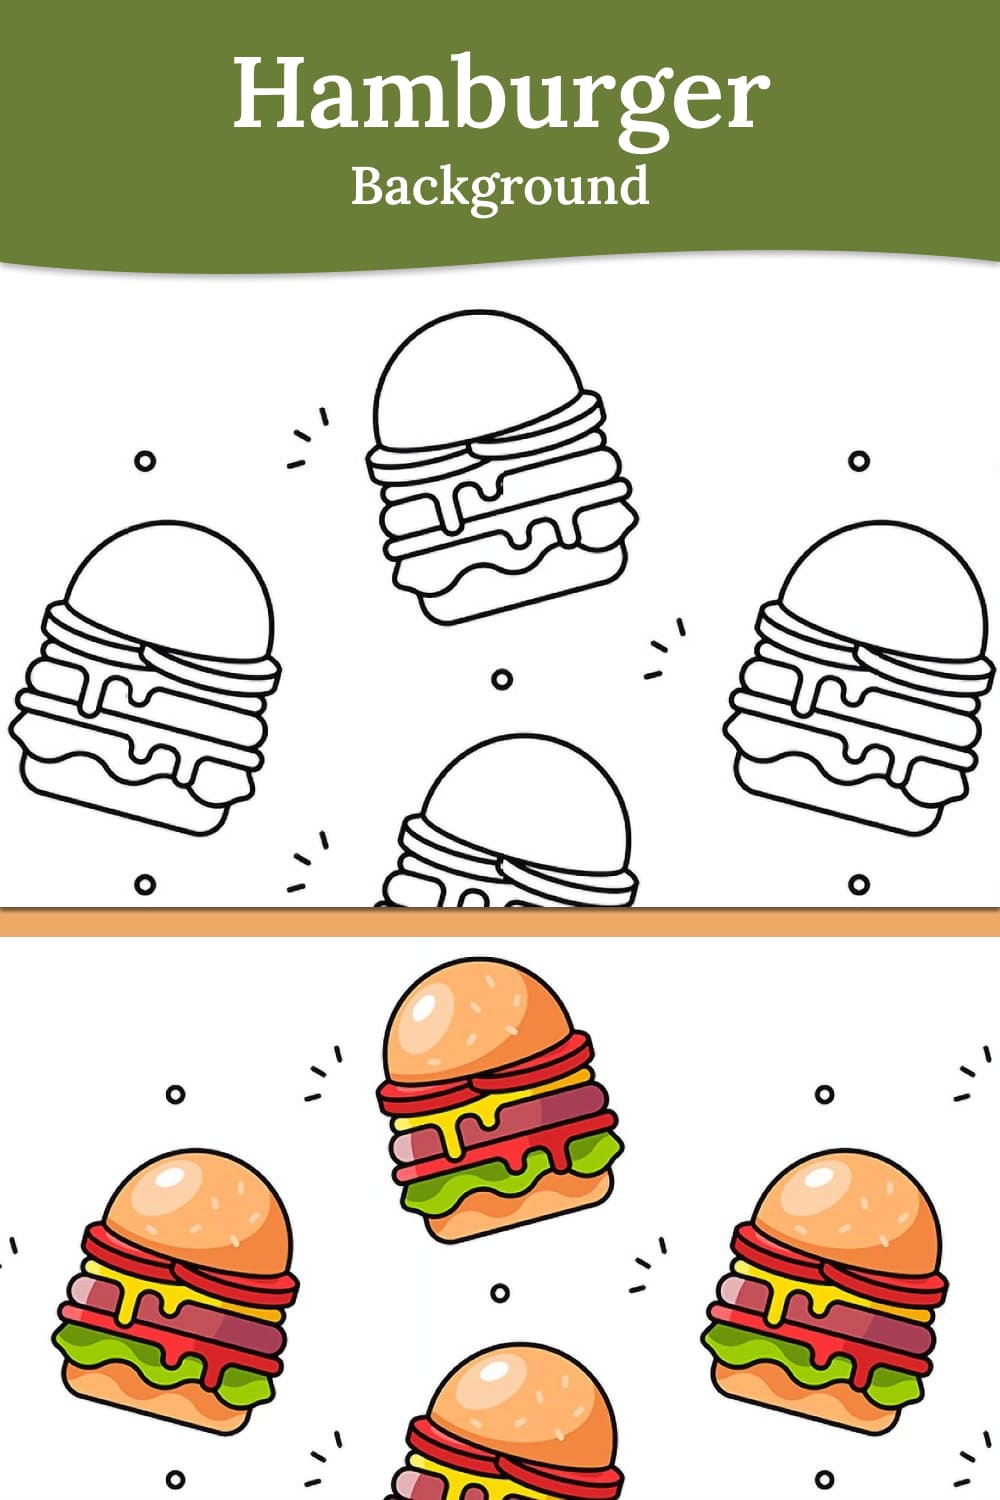 Hamburger background - pinterest image preview.